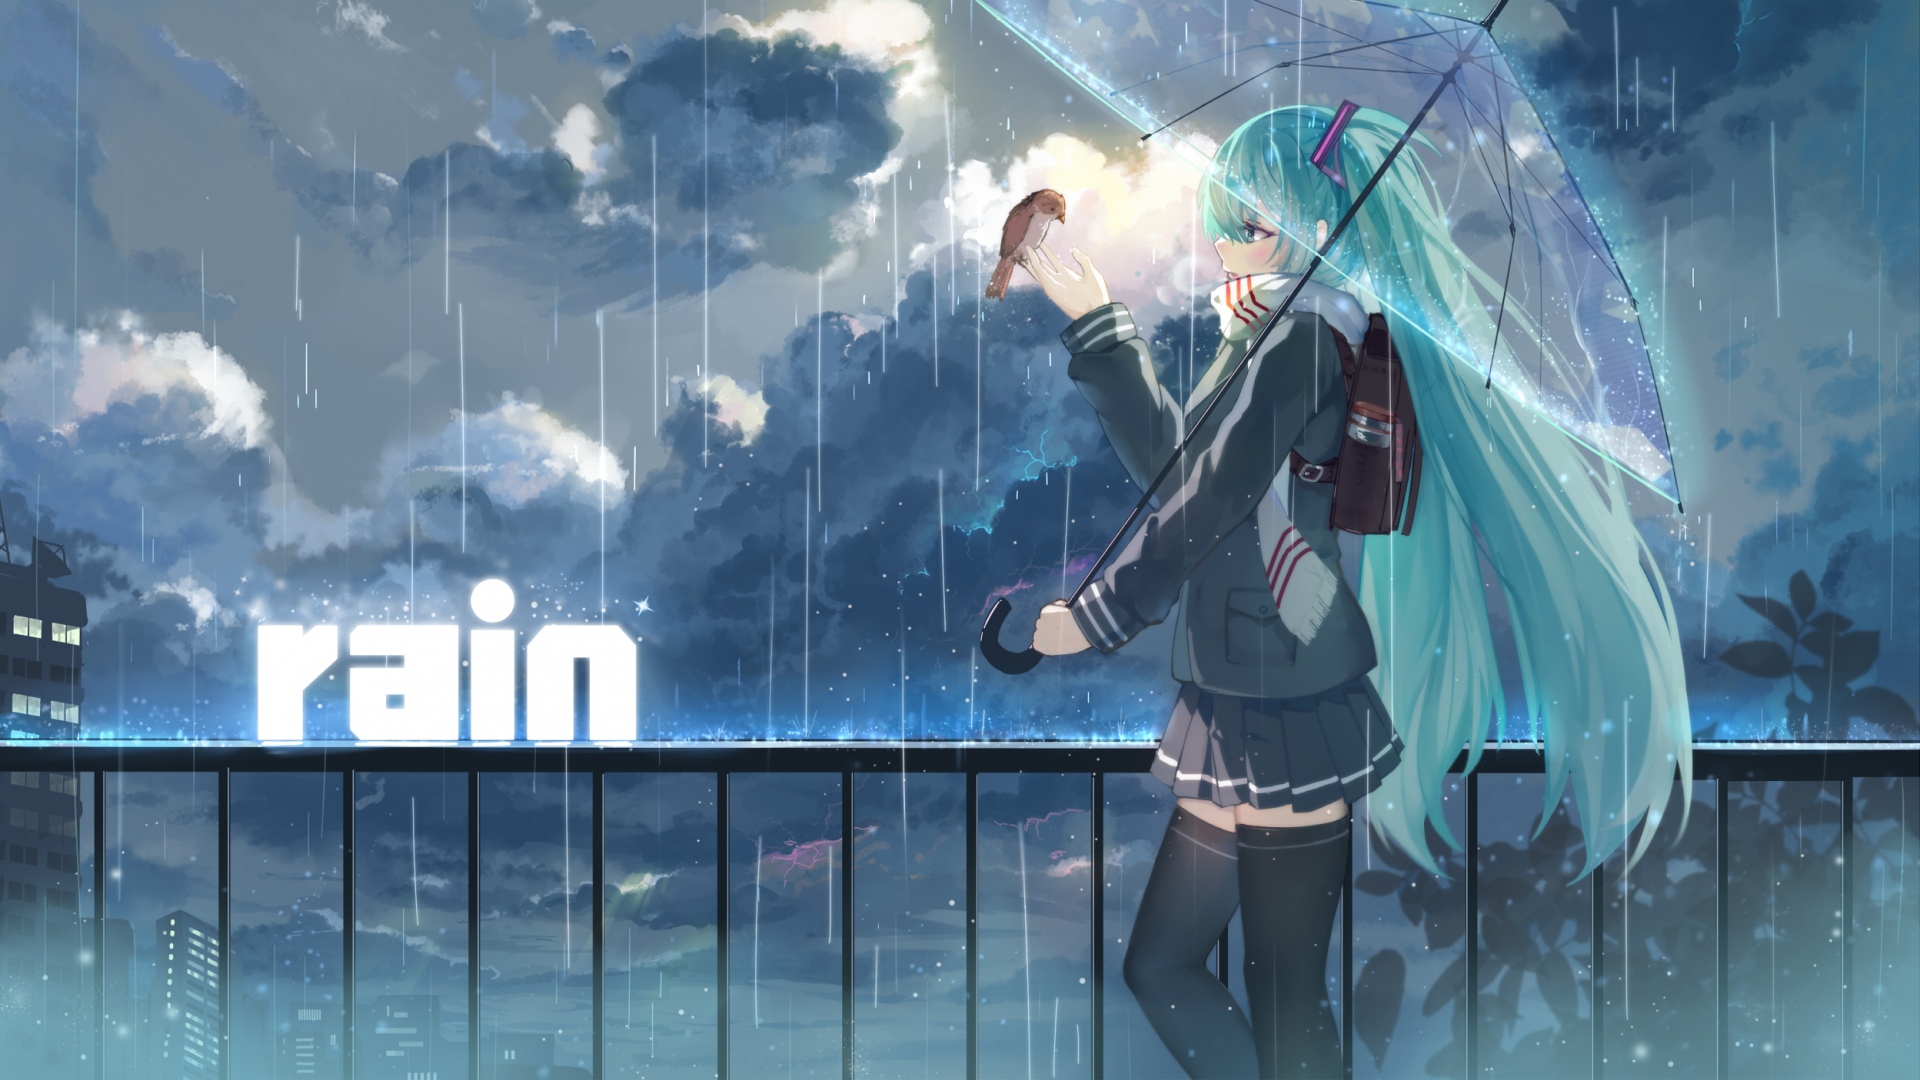 hatsune-miku-sad-umbrella-heavy-rain-overcast.jpg- Viewing image -The Pictu...